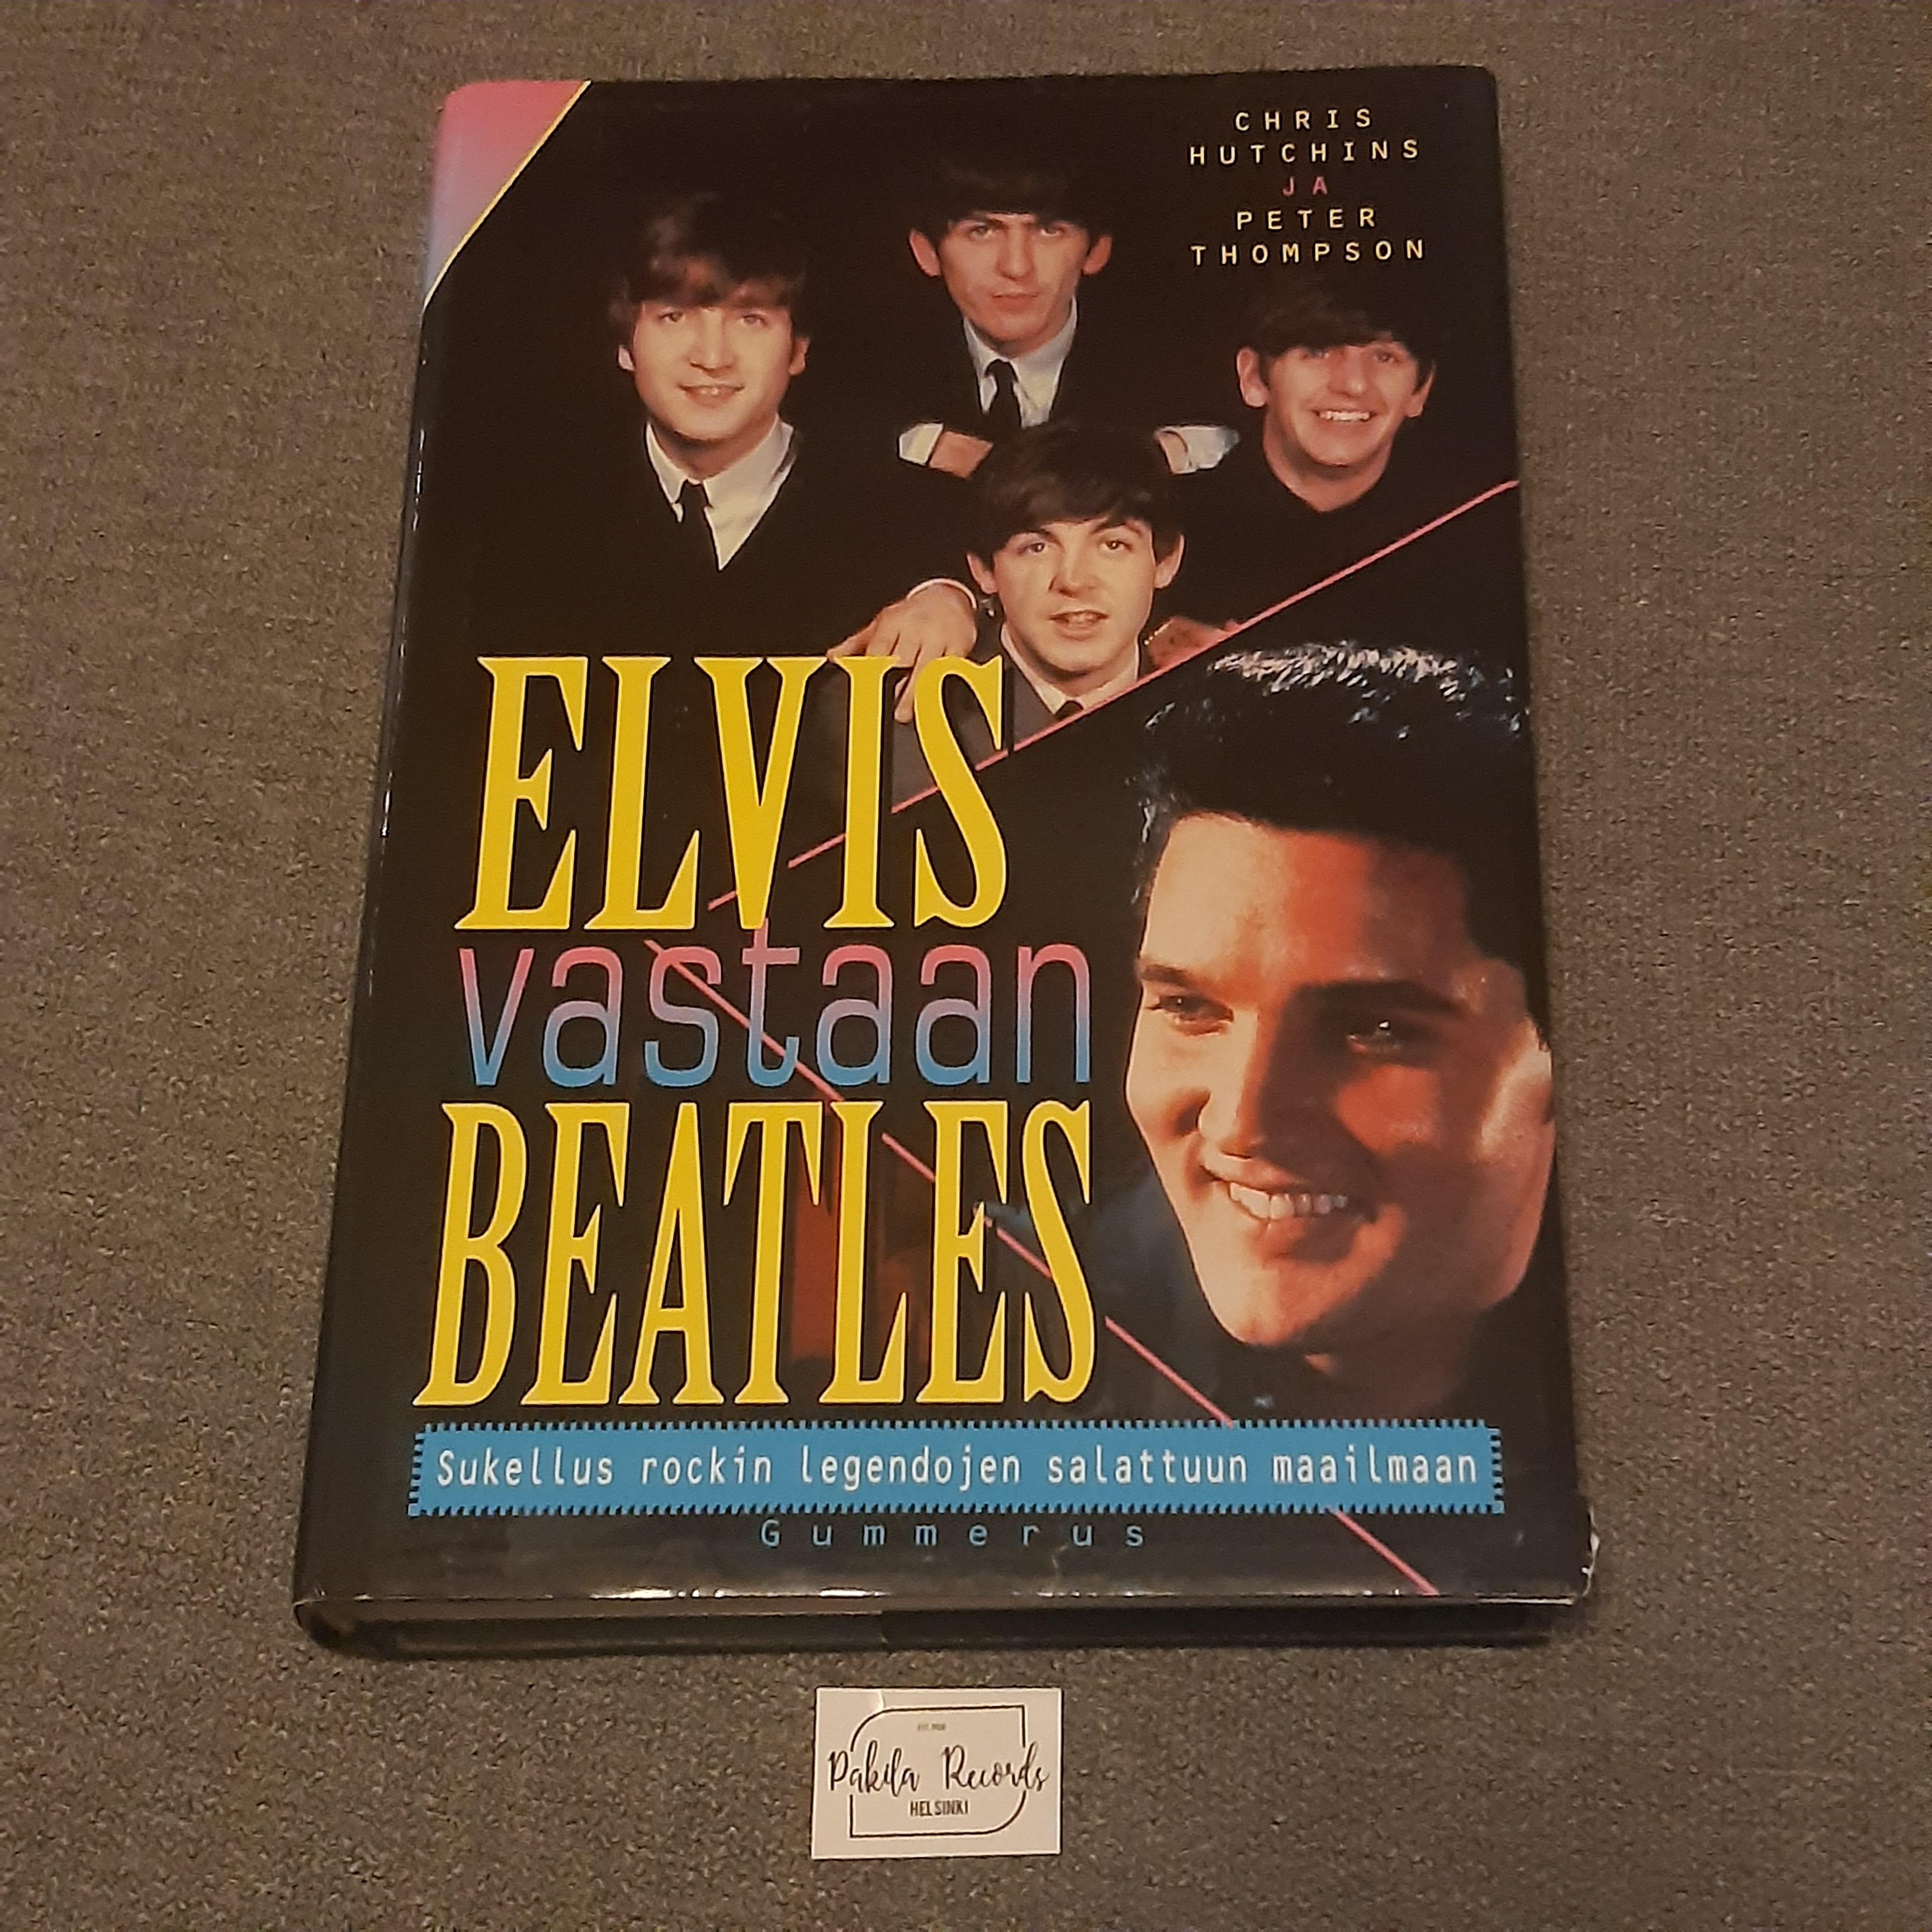 Elvis vastaan Beatles - Chris Hutchins ja Peter Thompson - Kirja (käytetty)